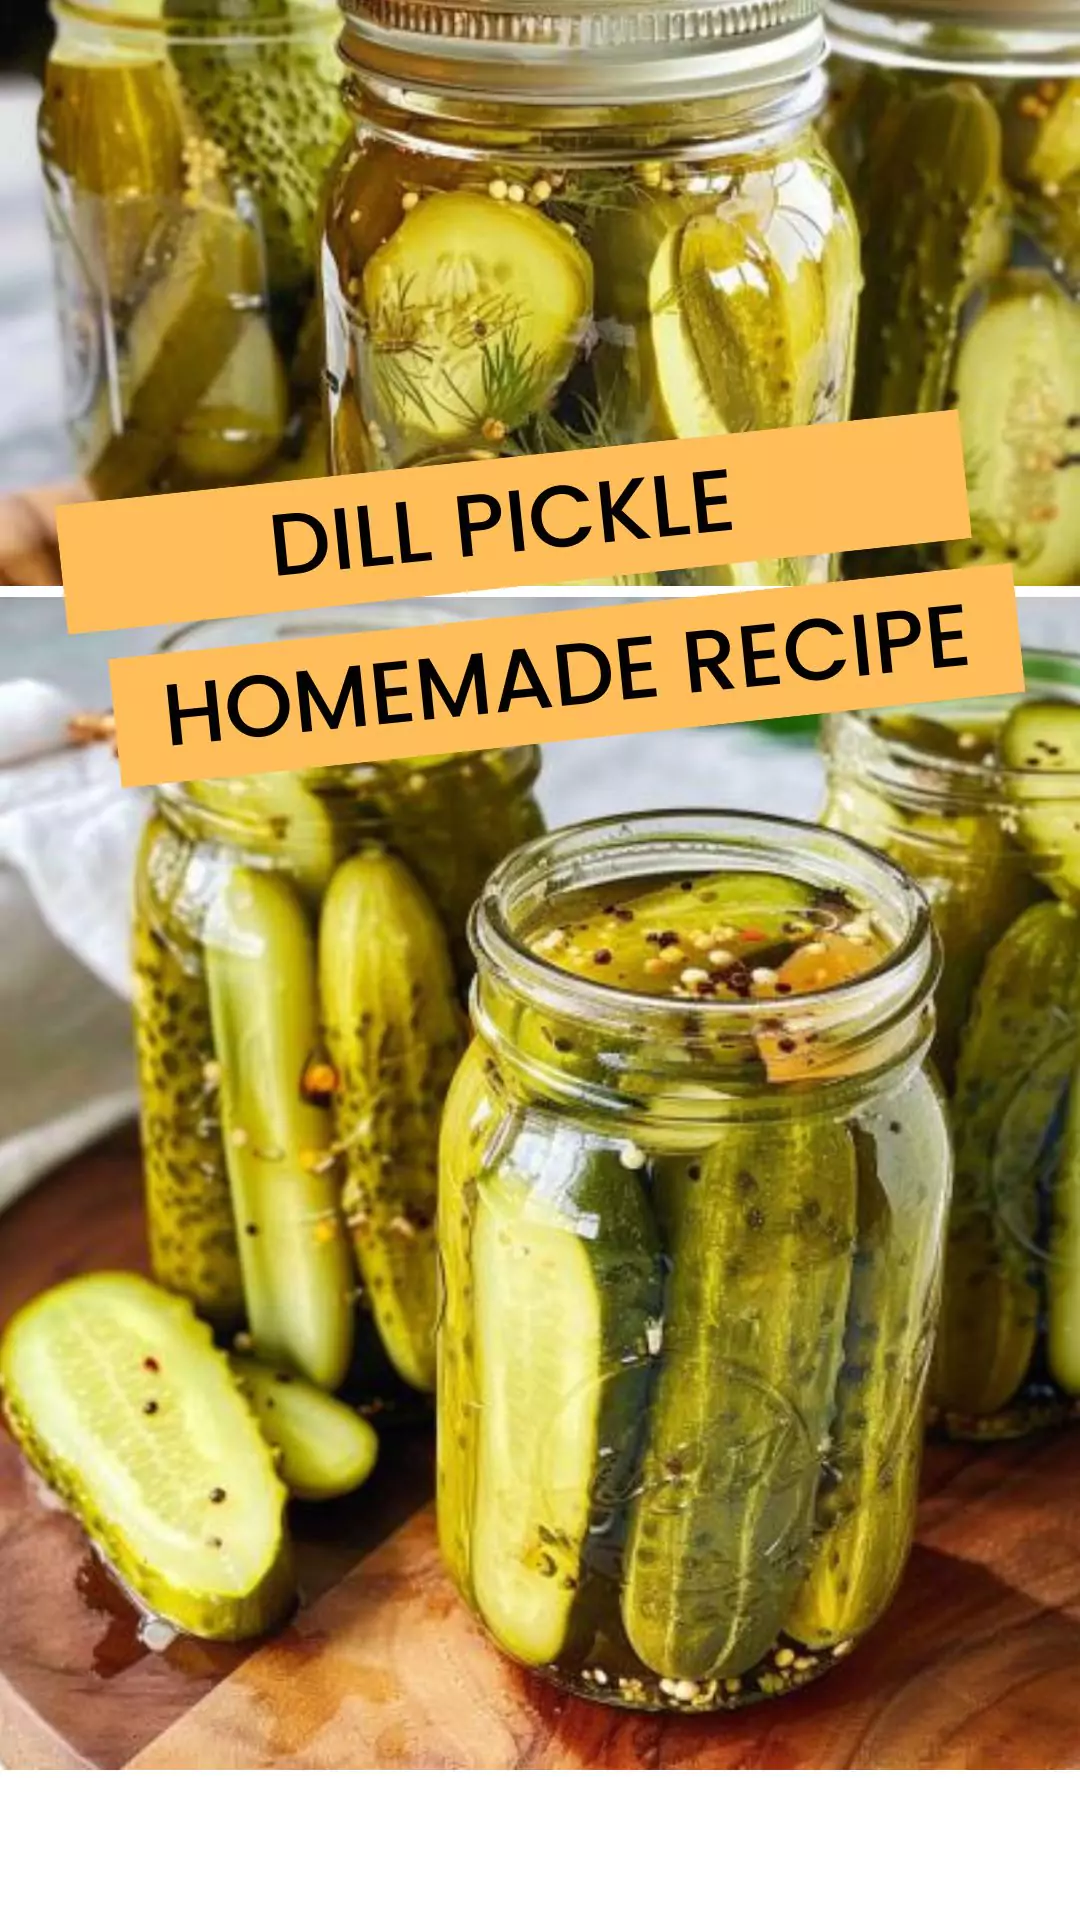 Dill pickle homemade recipe